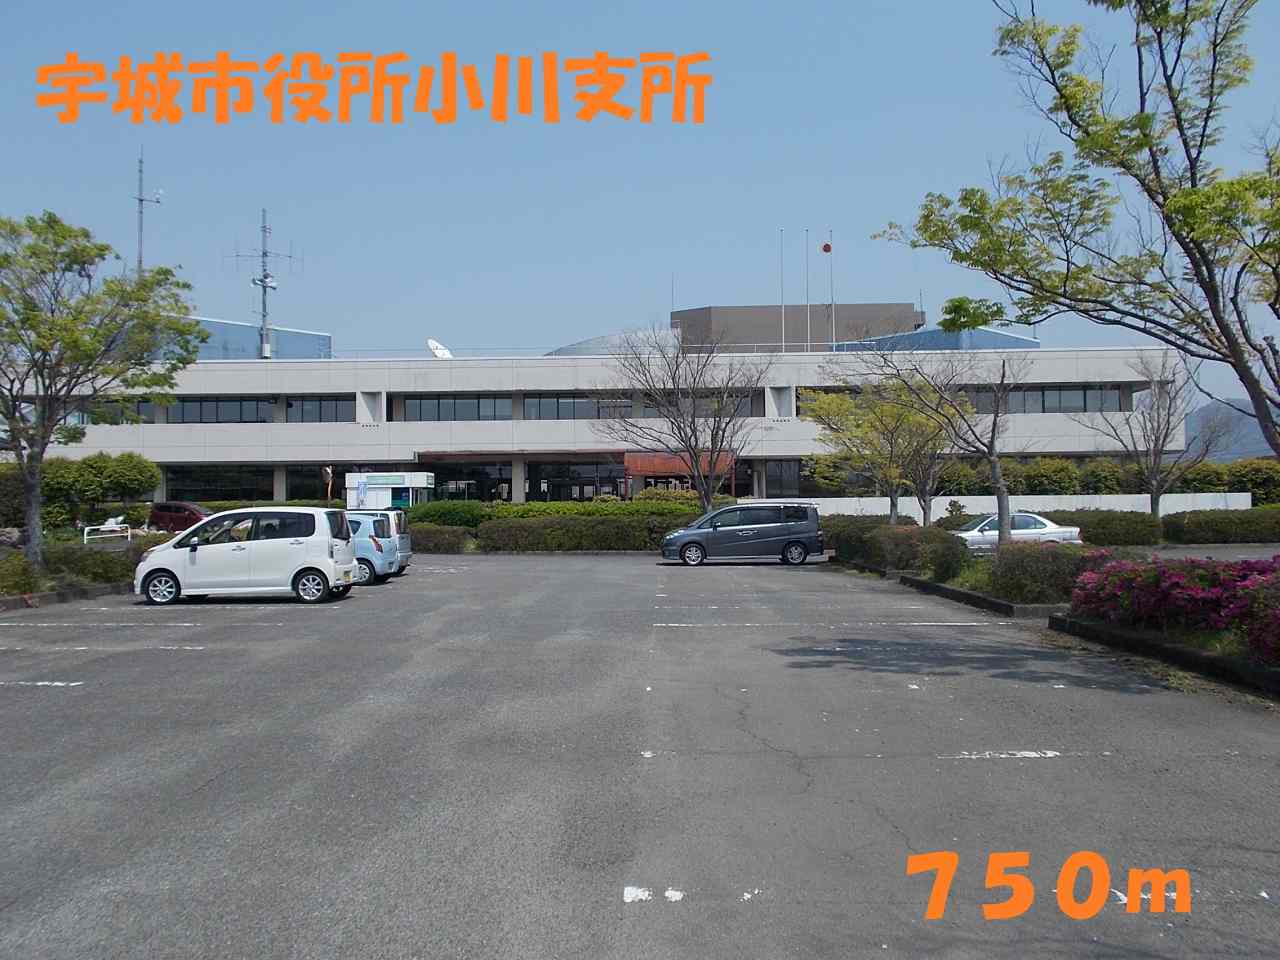 Government office. Uki city hall 750m Ogawa to branch office (government office)